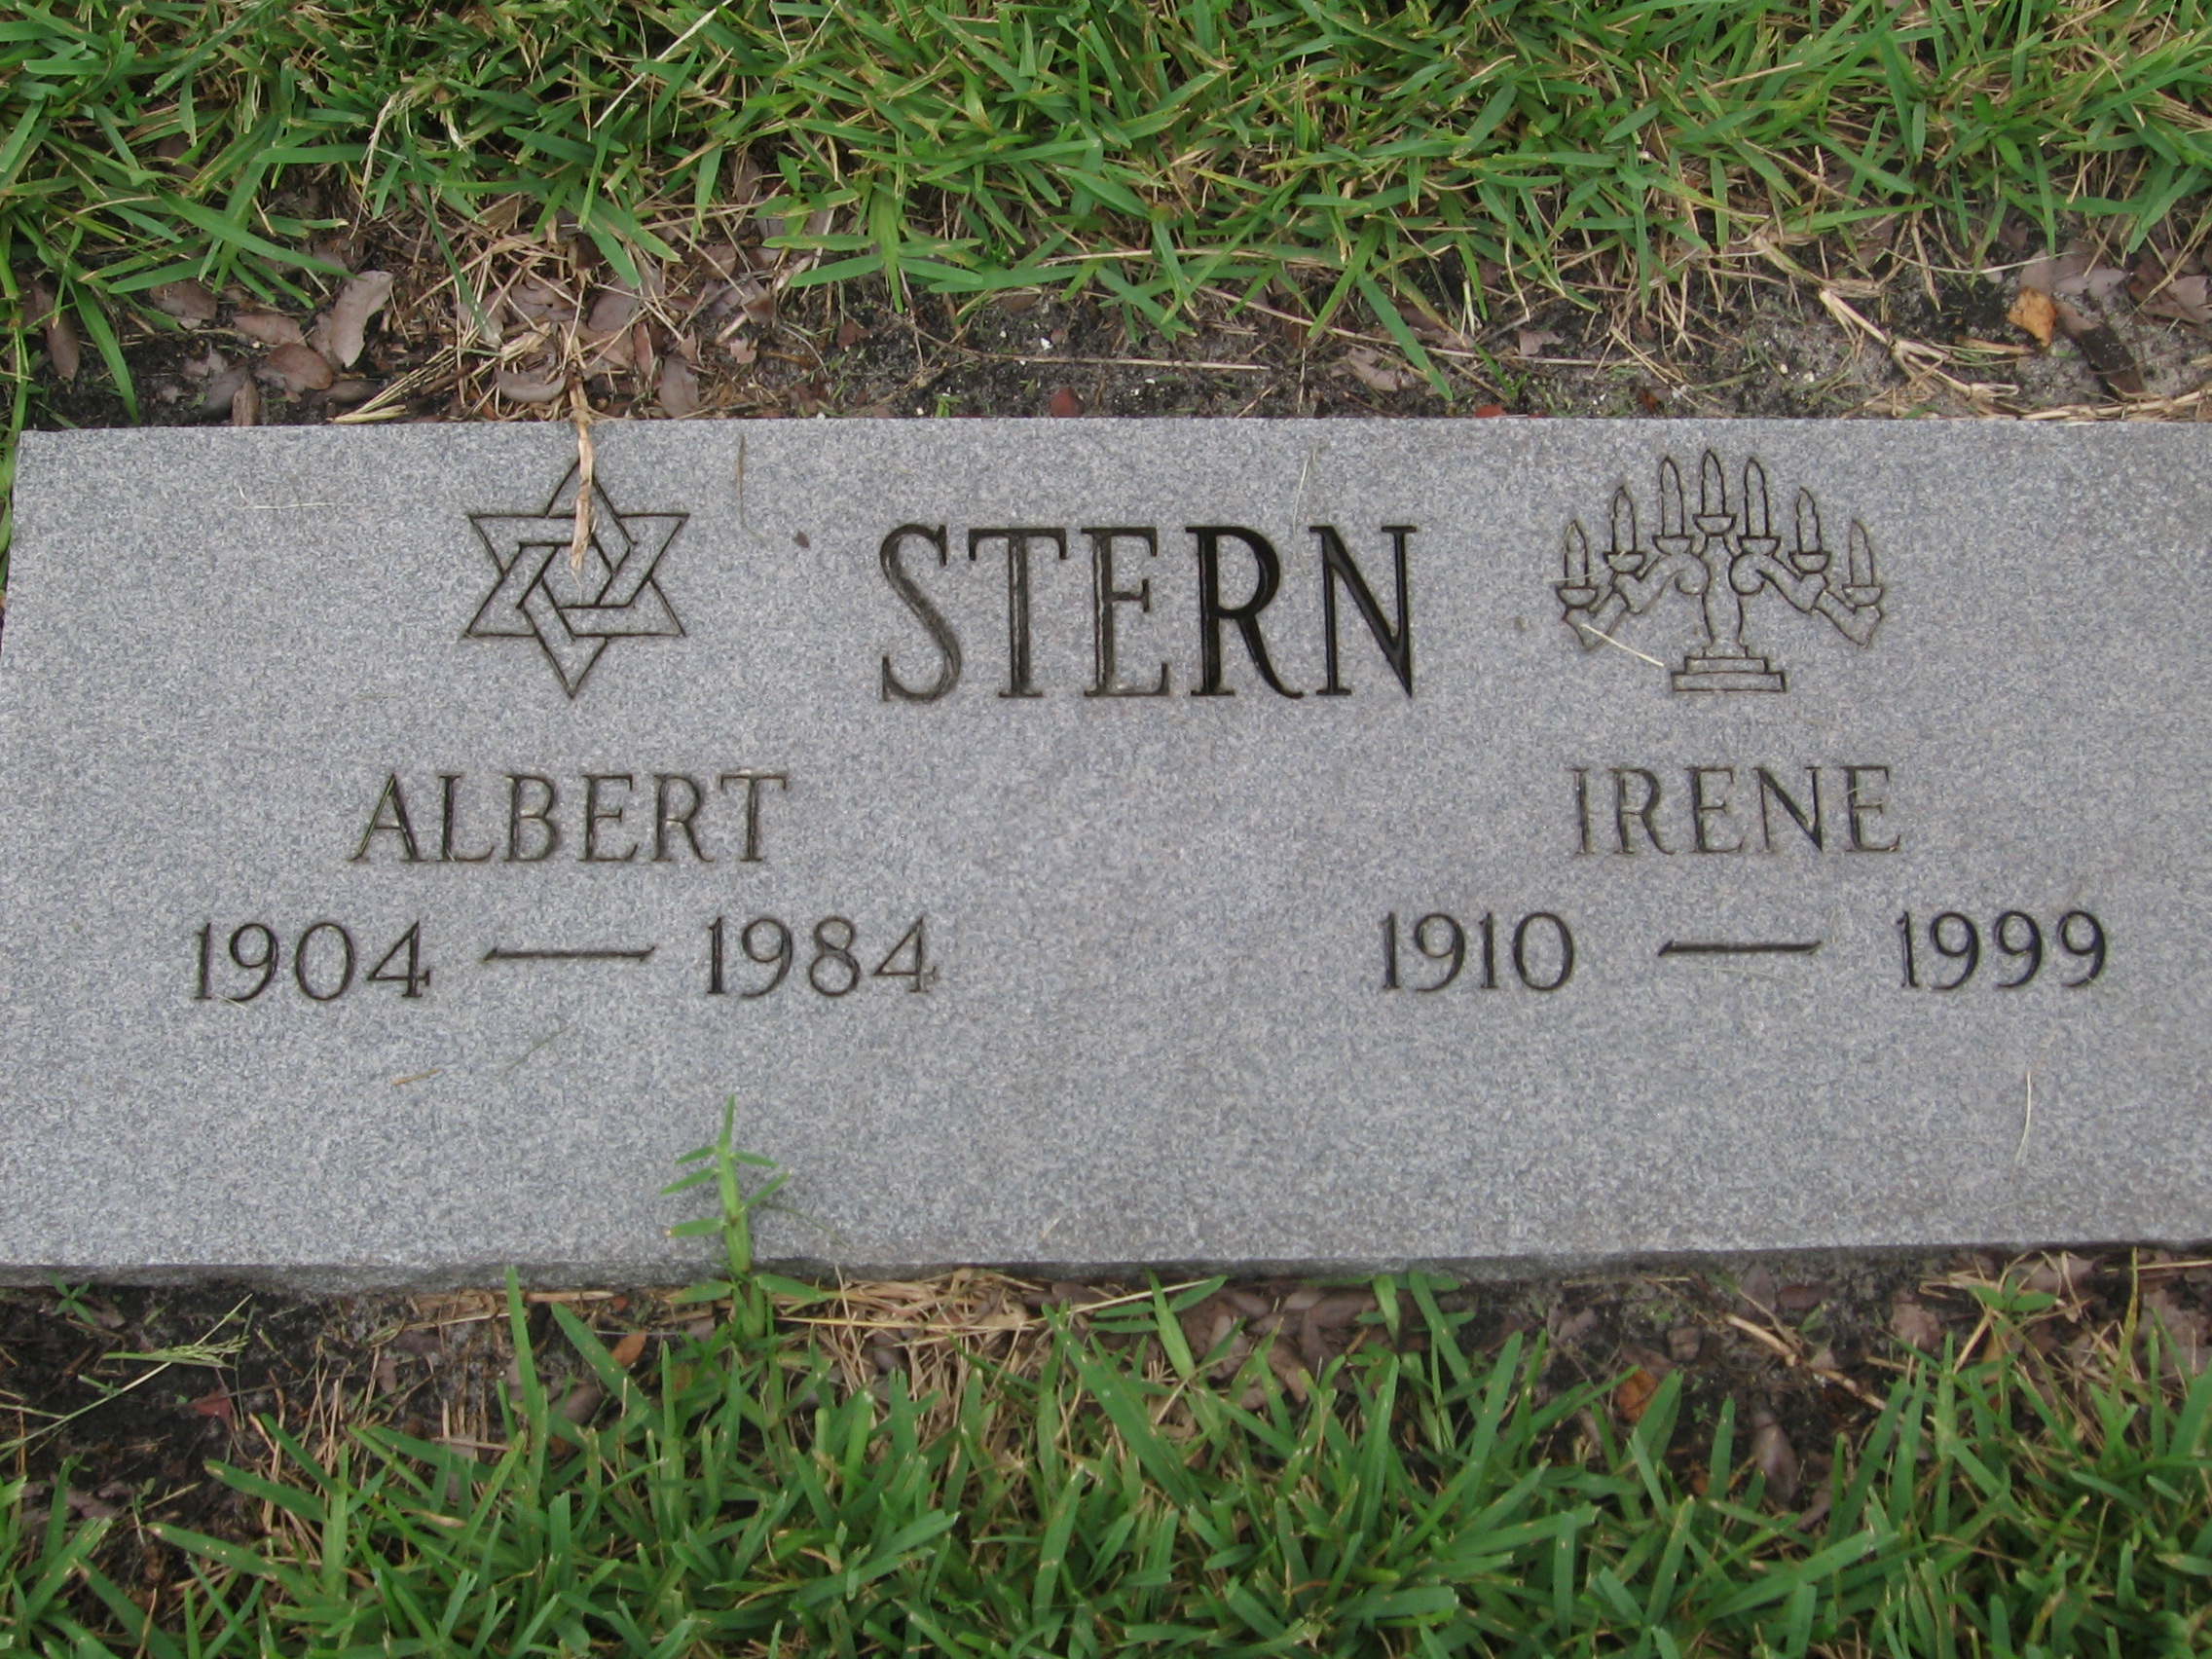 Albert Stern